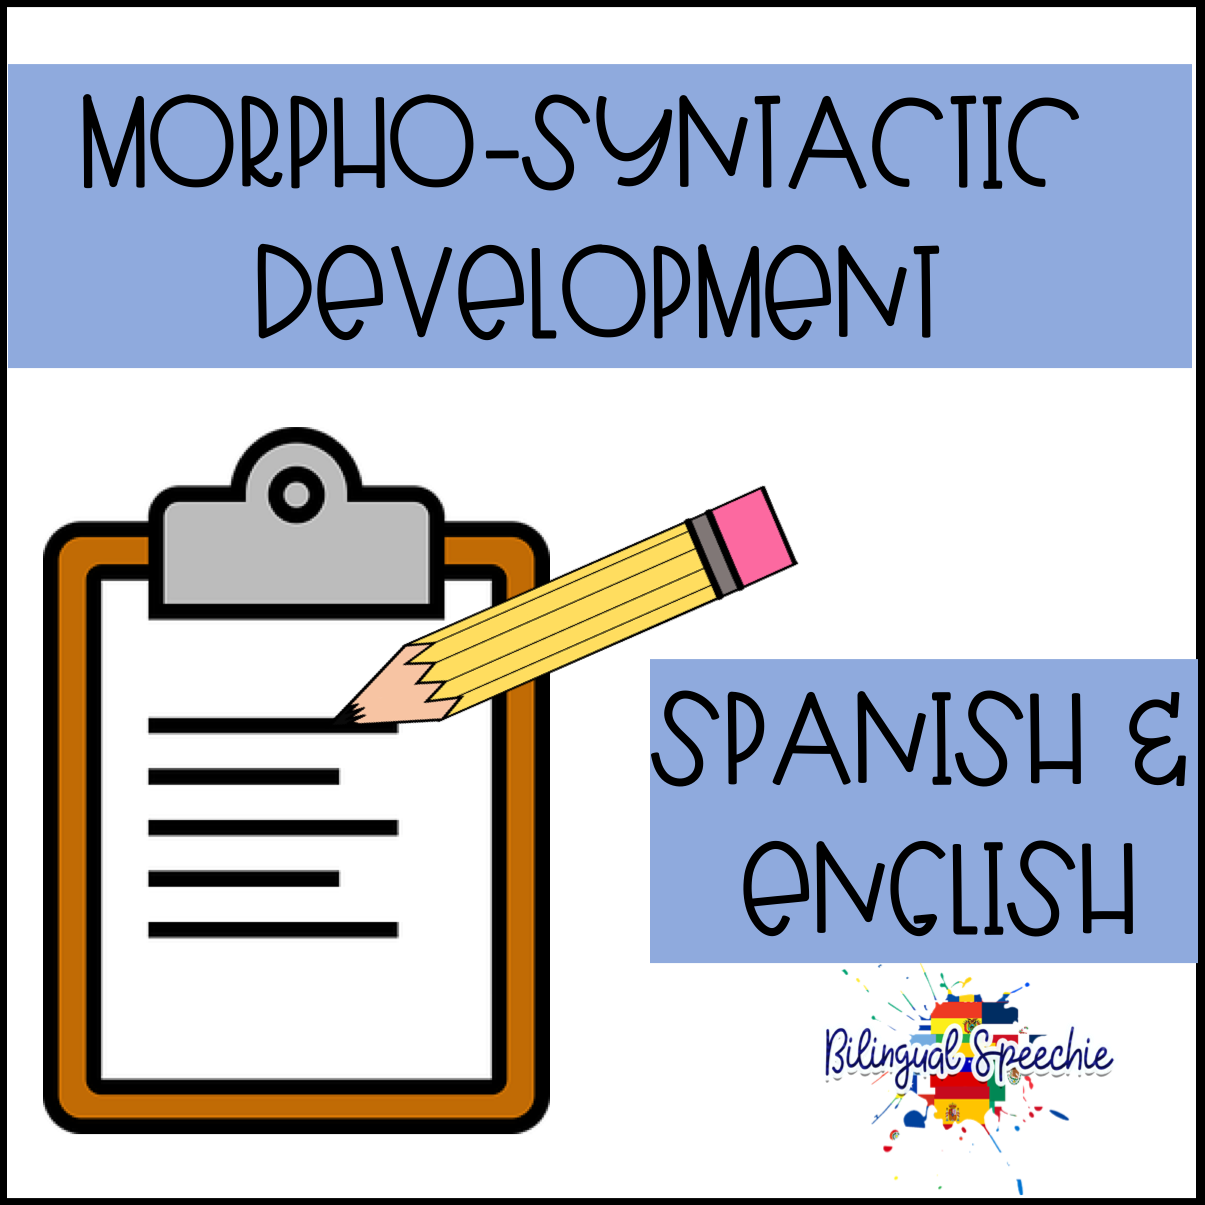 Morpho-Syntactic Development in Spanish & English